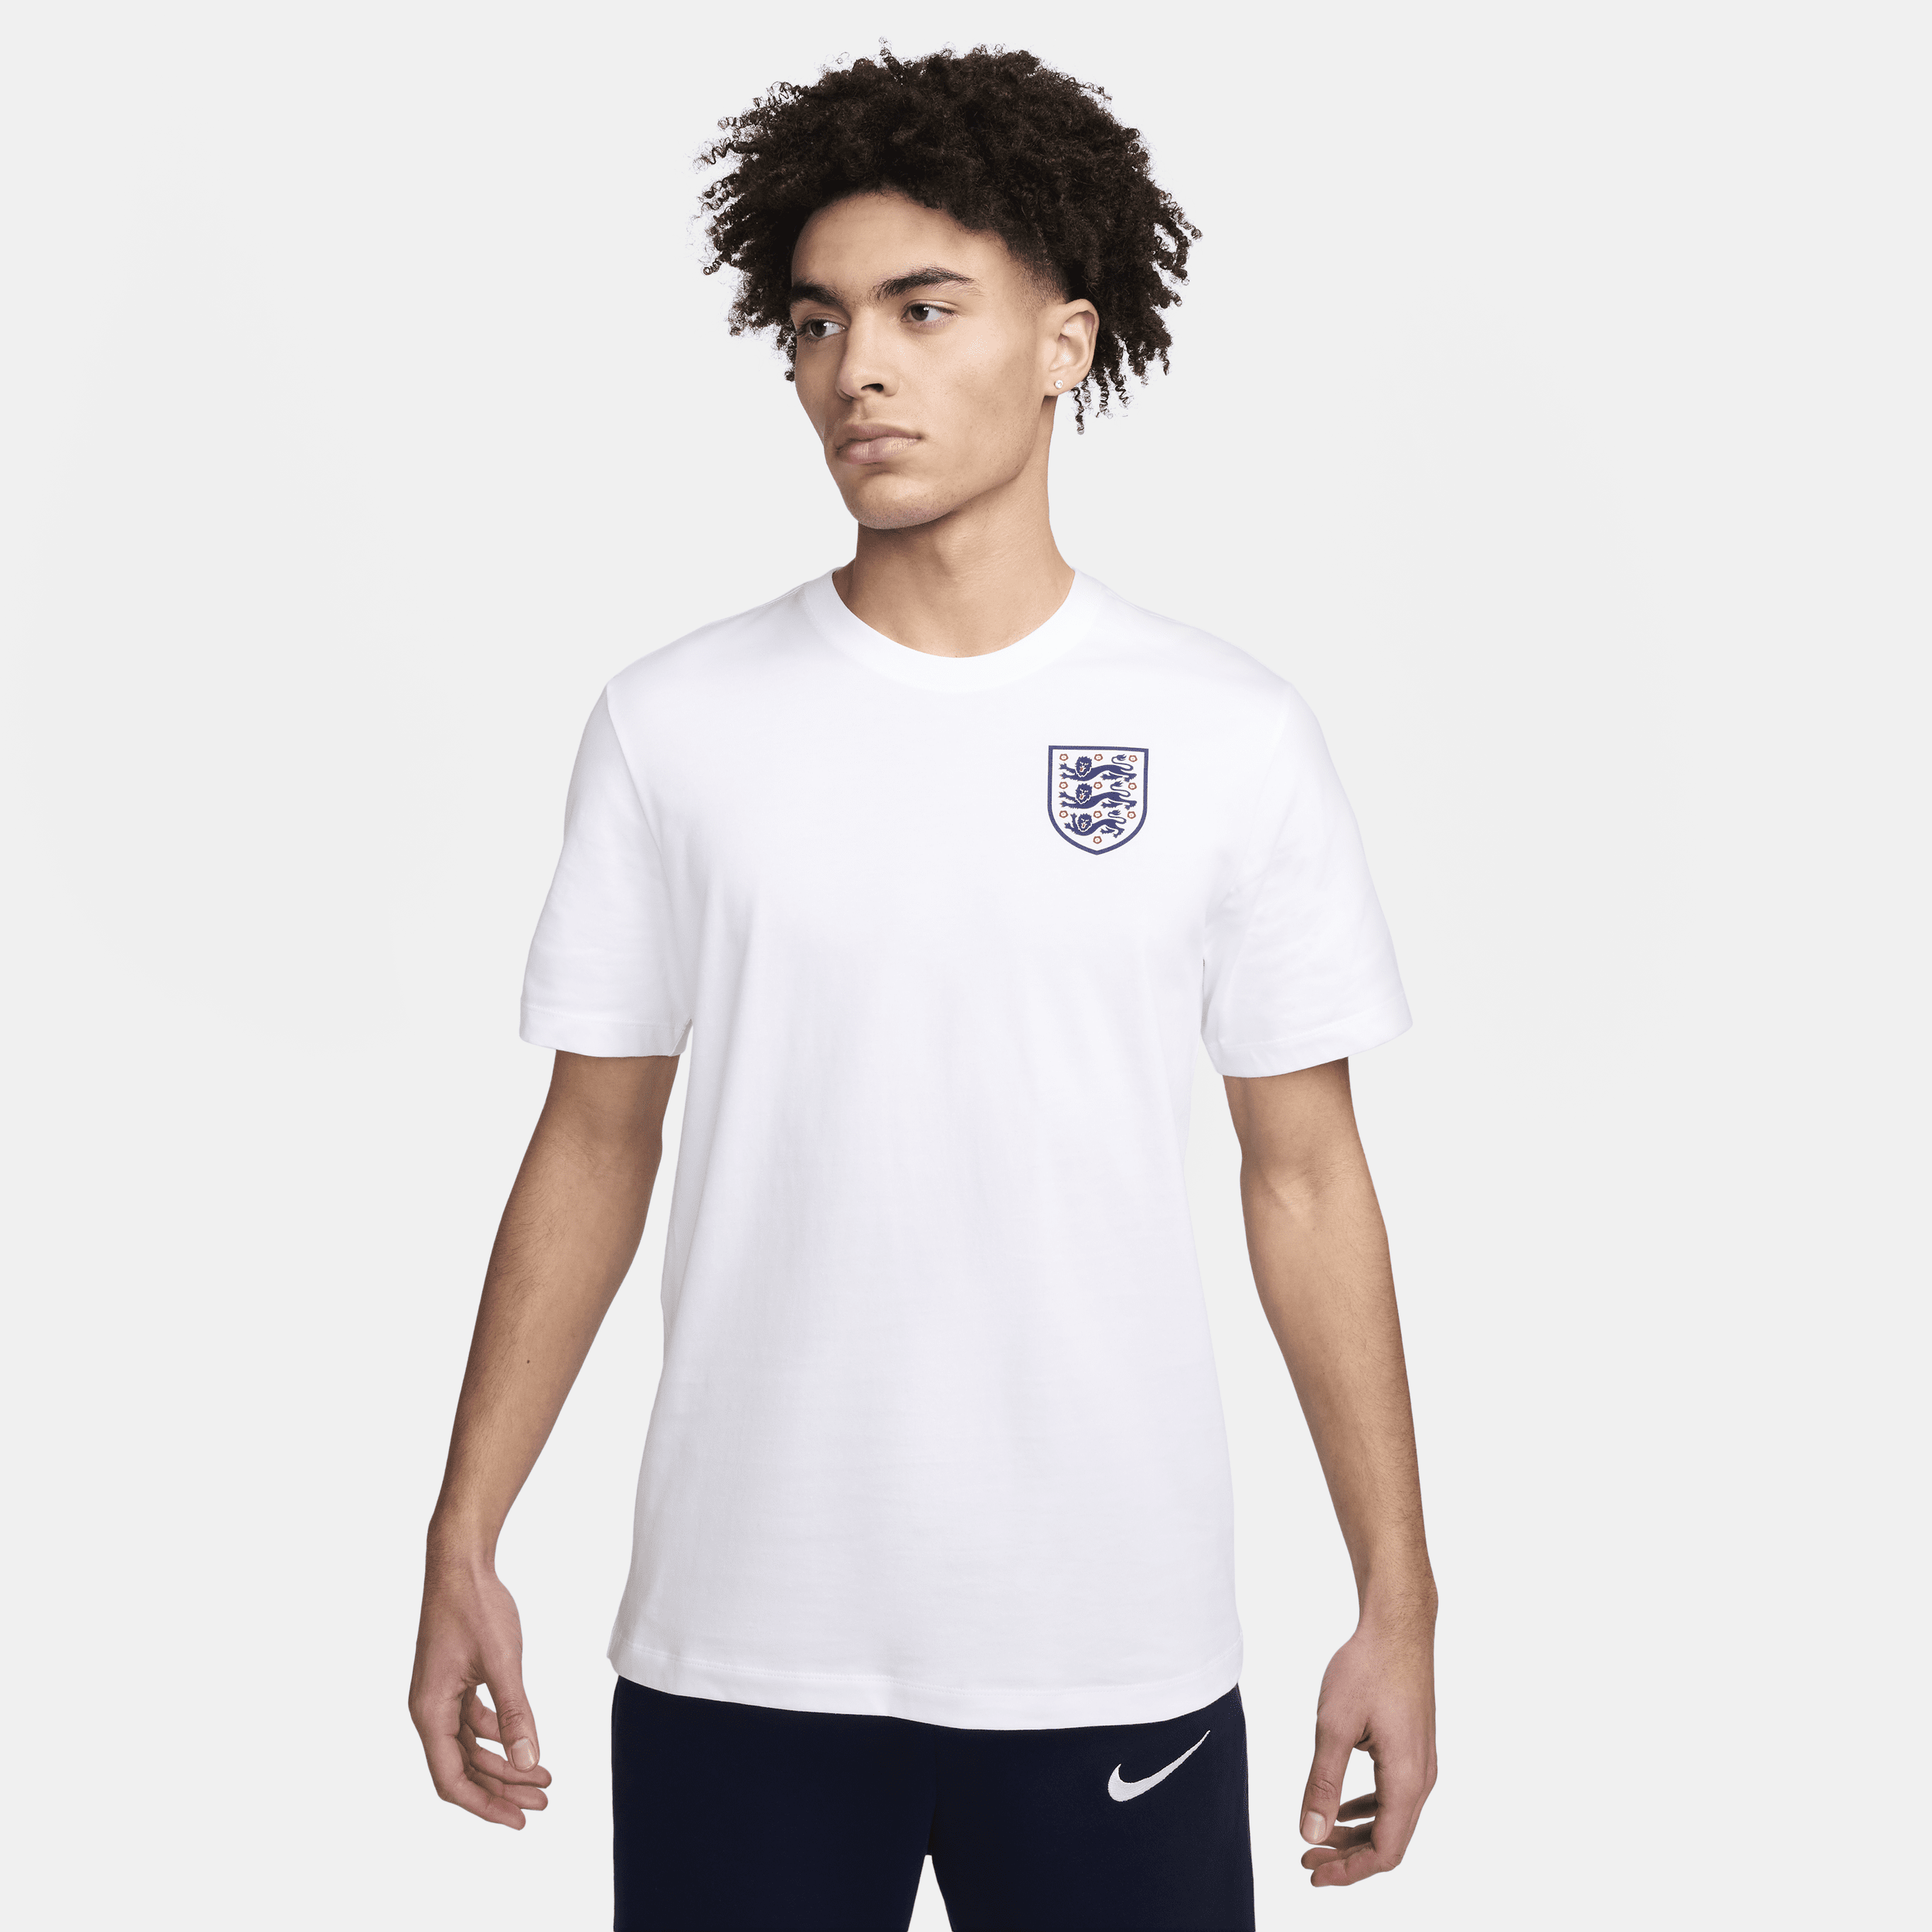 Nike Engeland voetbalshirt voor heren Wit